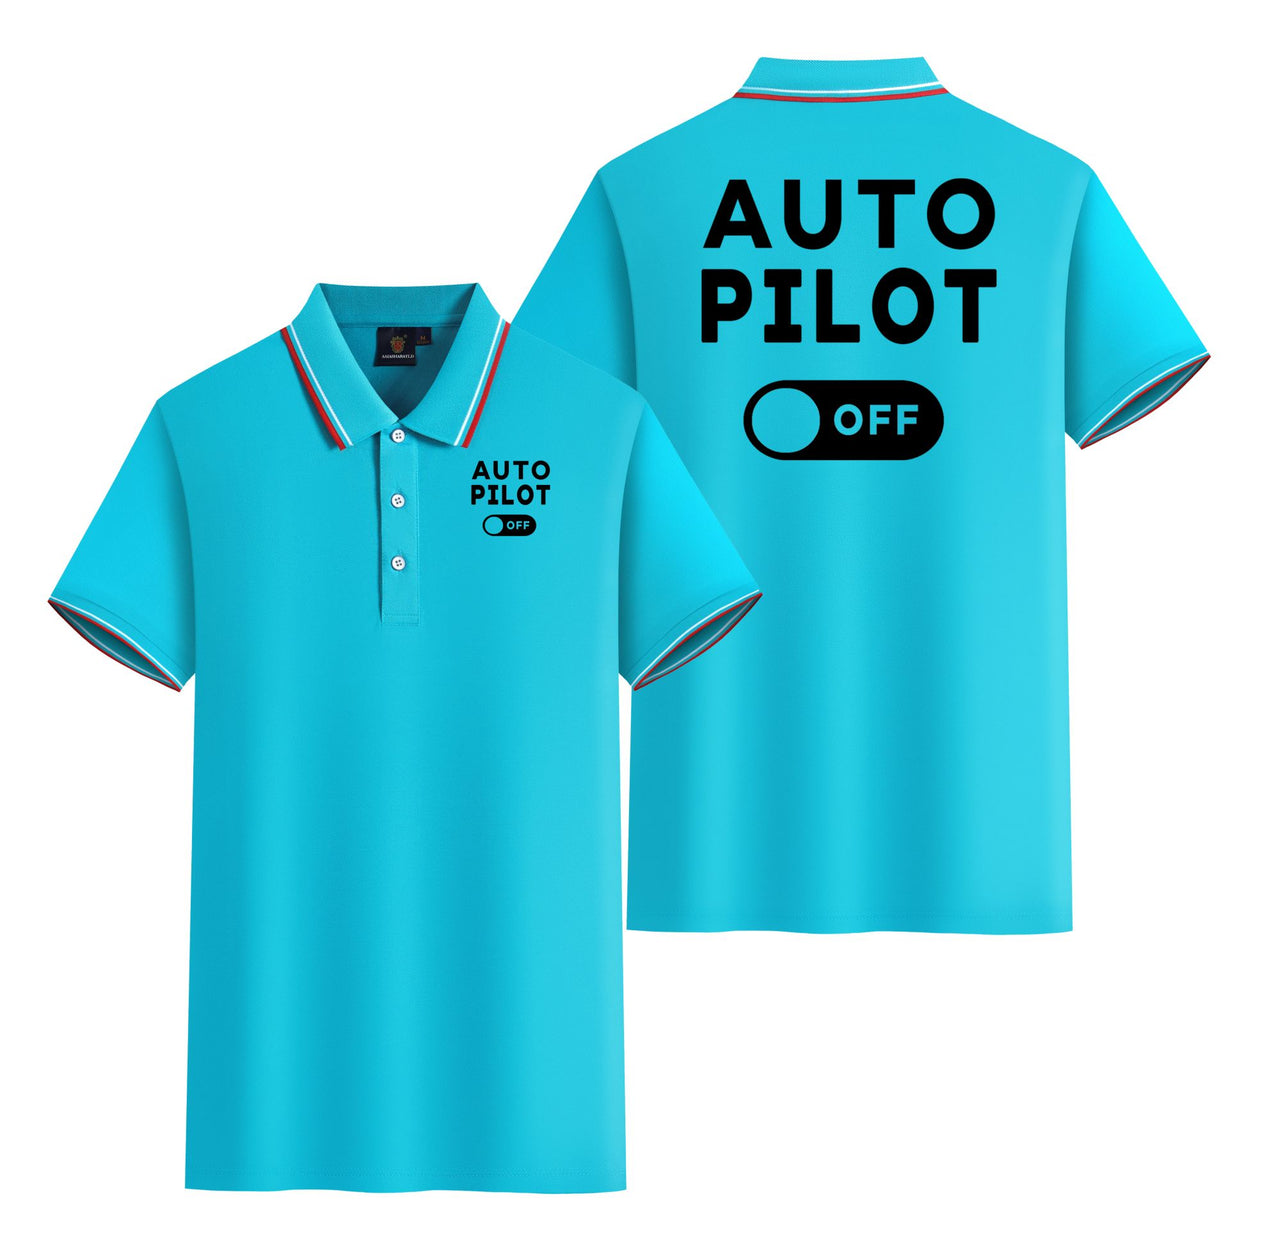 Auto Pilot Off Designed Stylish Polo T-Shirts (Double-Side)